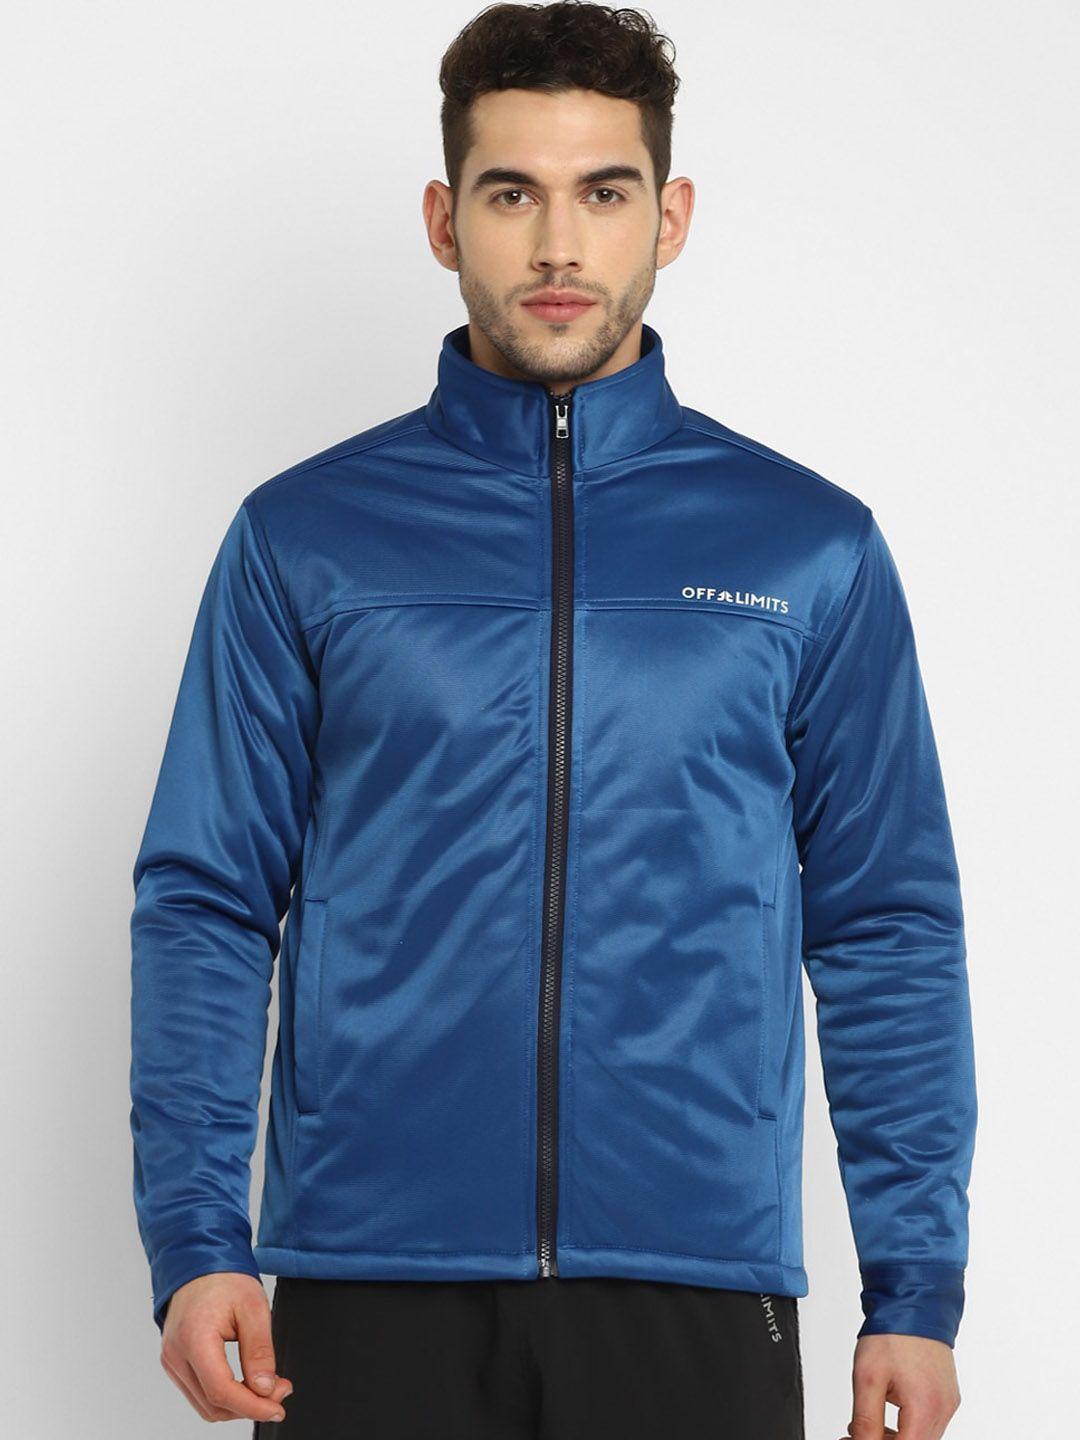 off-limits-men-blue-printed-sporty-jacket